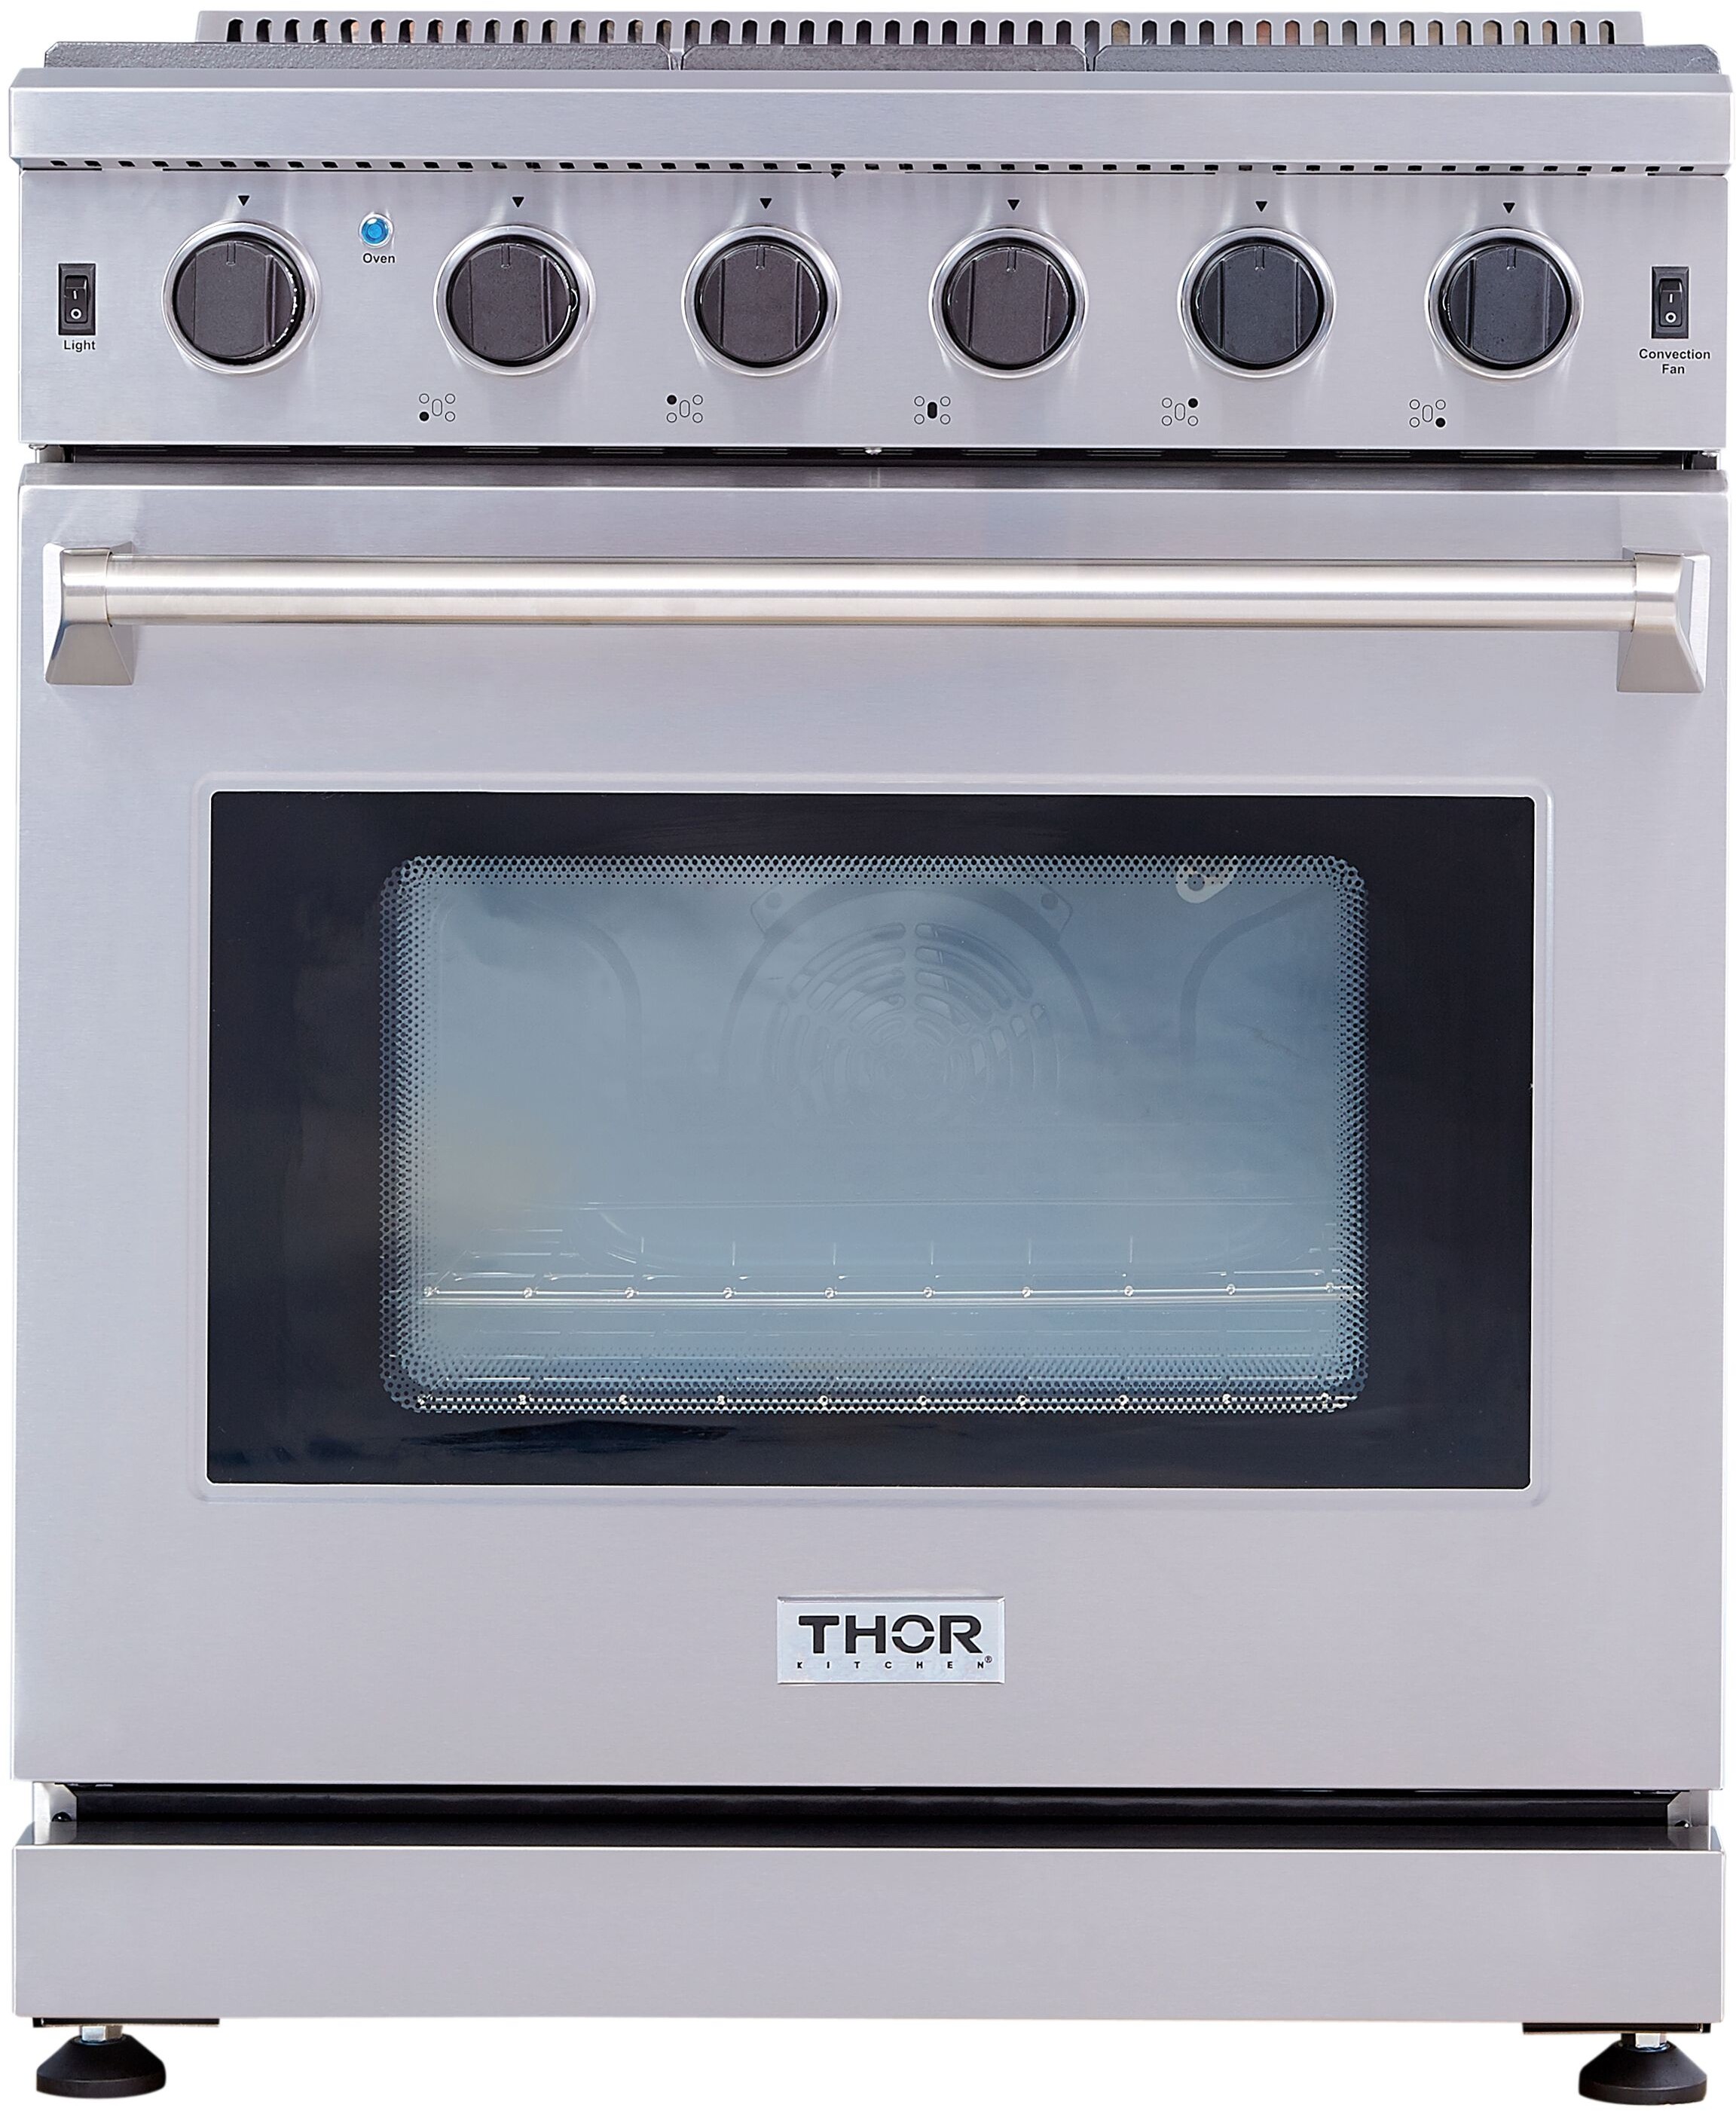 30"" Freestanding Natural Gas Range - Thor Kitchen LRG3001U